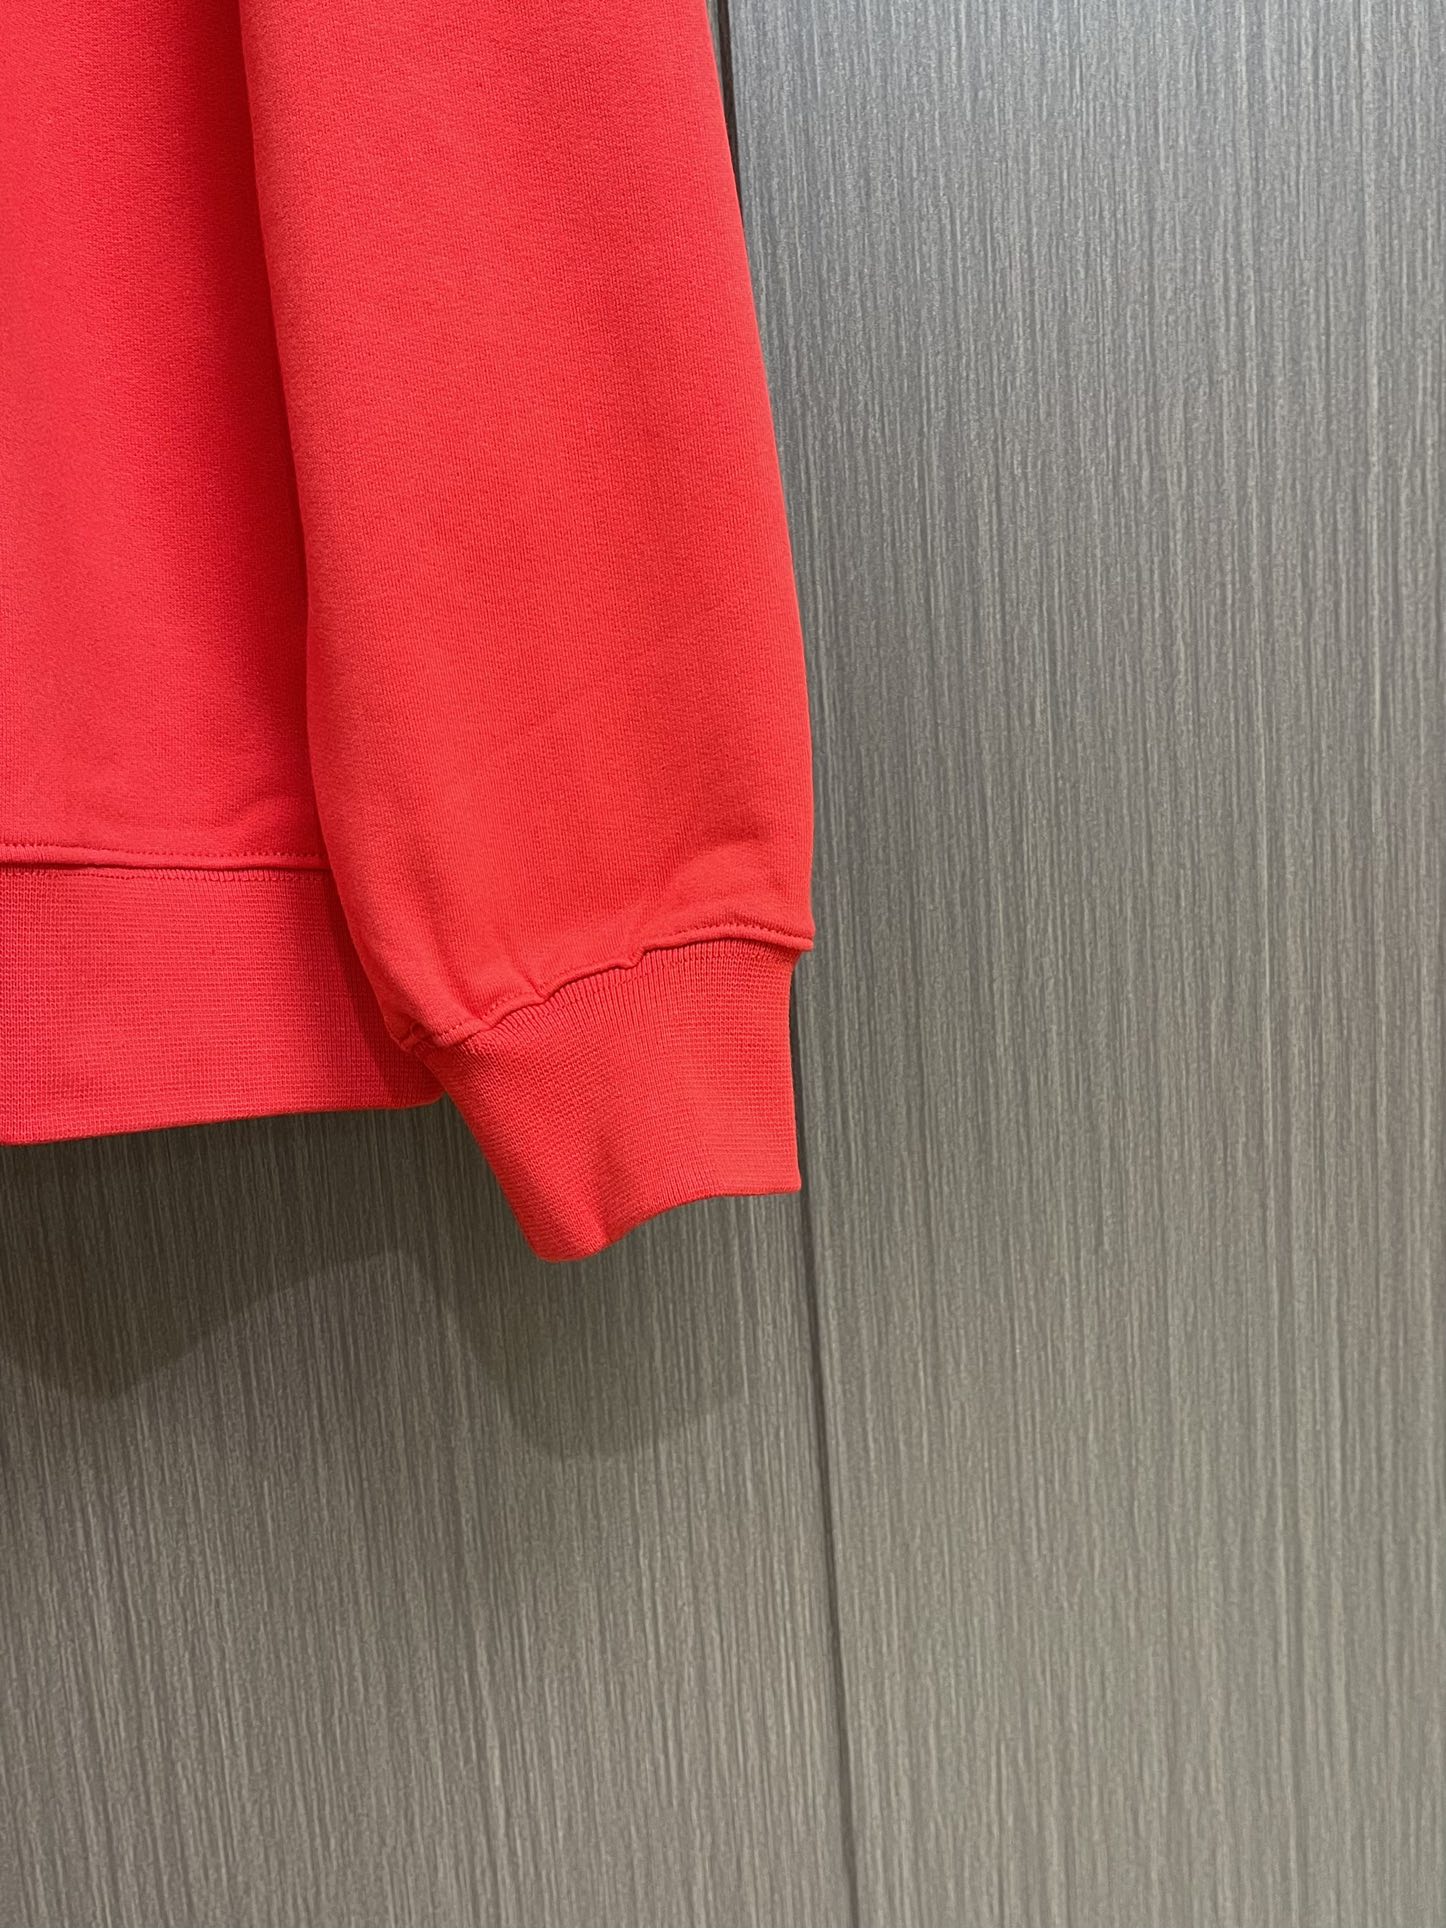 Dior新年限定刺绣卫衣颜色洗水一致！春节限定色标志卫衣这款卫衣突显经典廓形采用红色棉质起绒面料精心制作